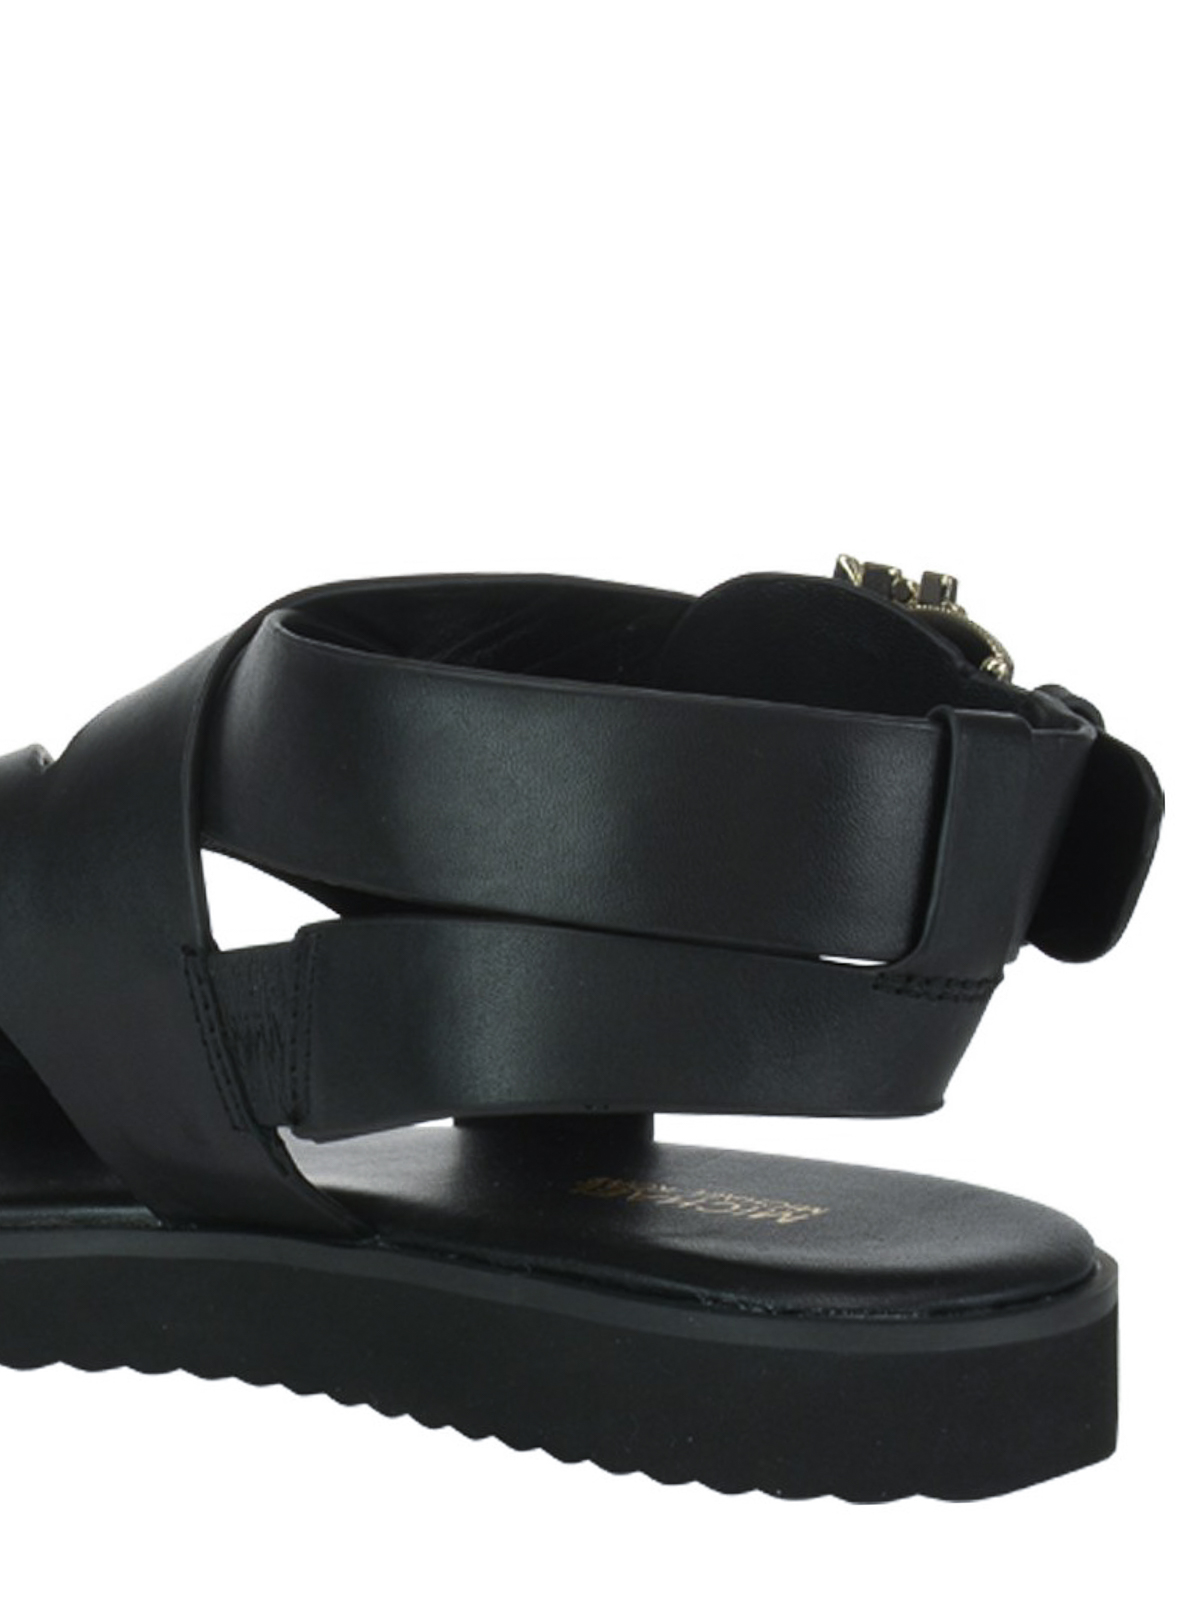 Sandals Michael Kors - Frieda flat sandals with jewel buckle - 40S9FRFA1L001